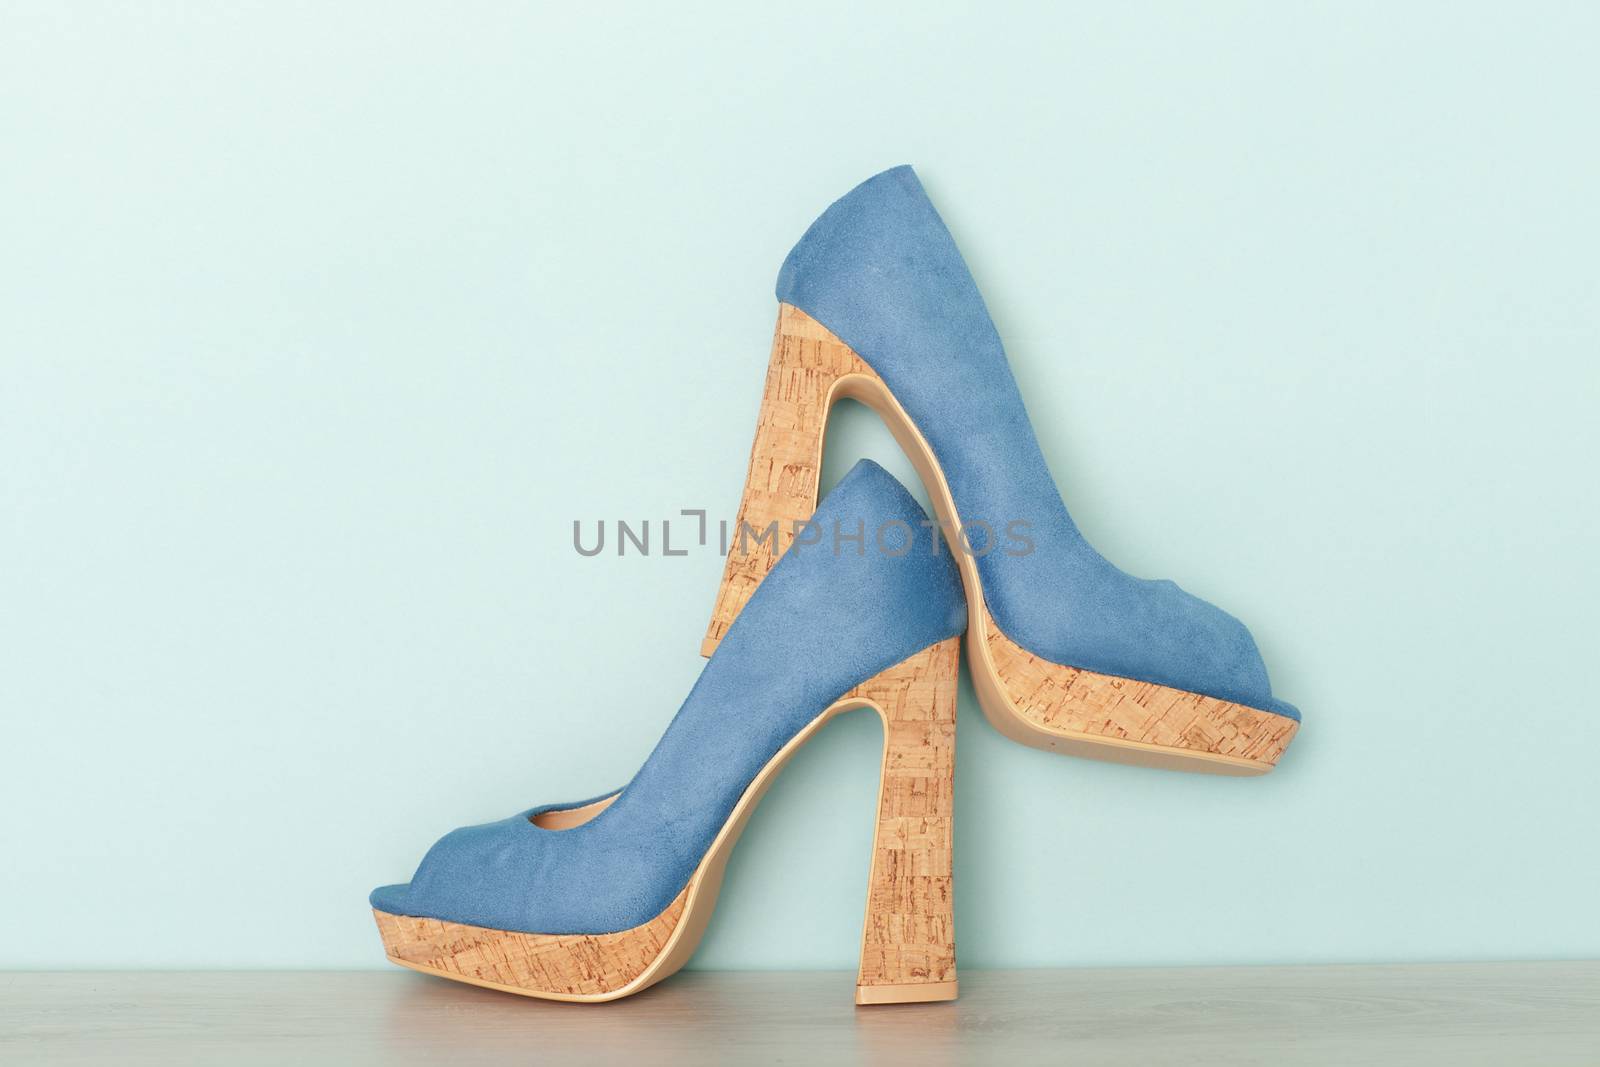 Fashionable Peeptoe High Heels on blue background